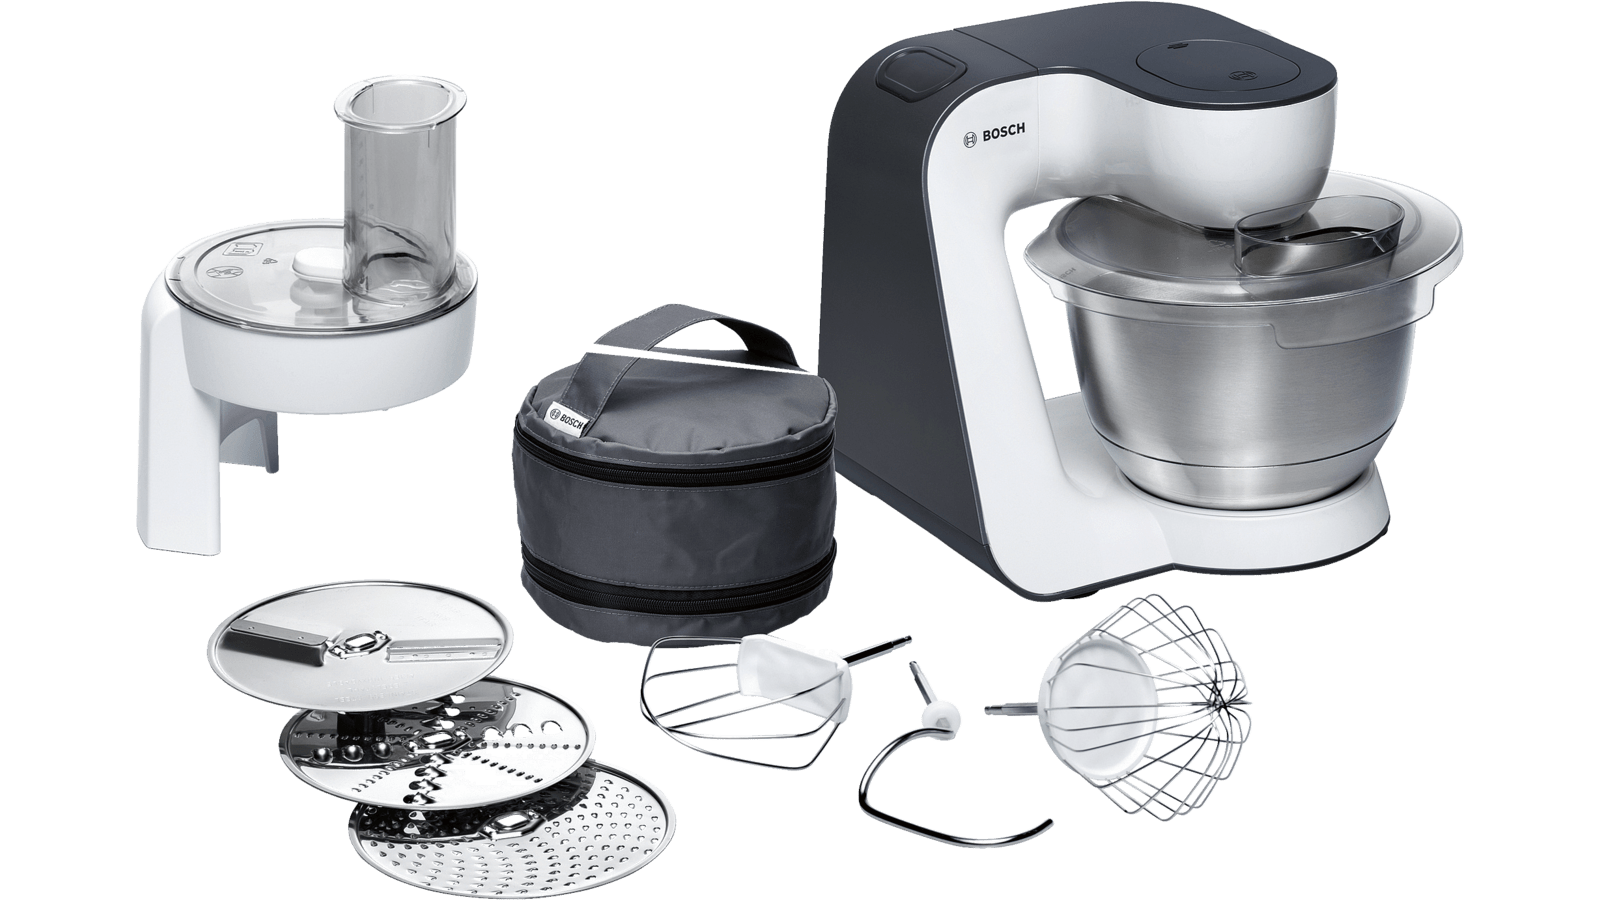 Fobie zijde Luxe MUM52110 Keukenmachine | BOSCH NL